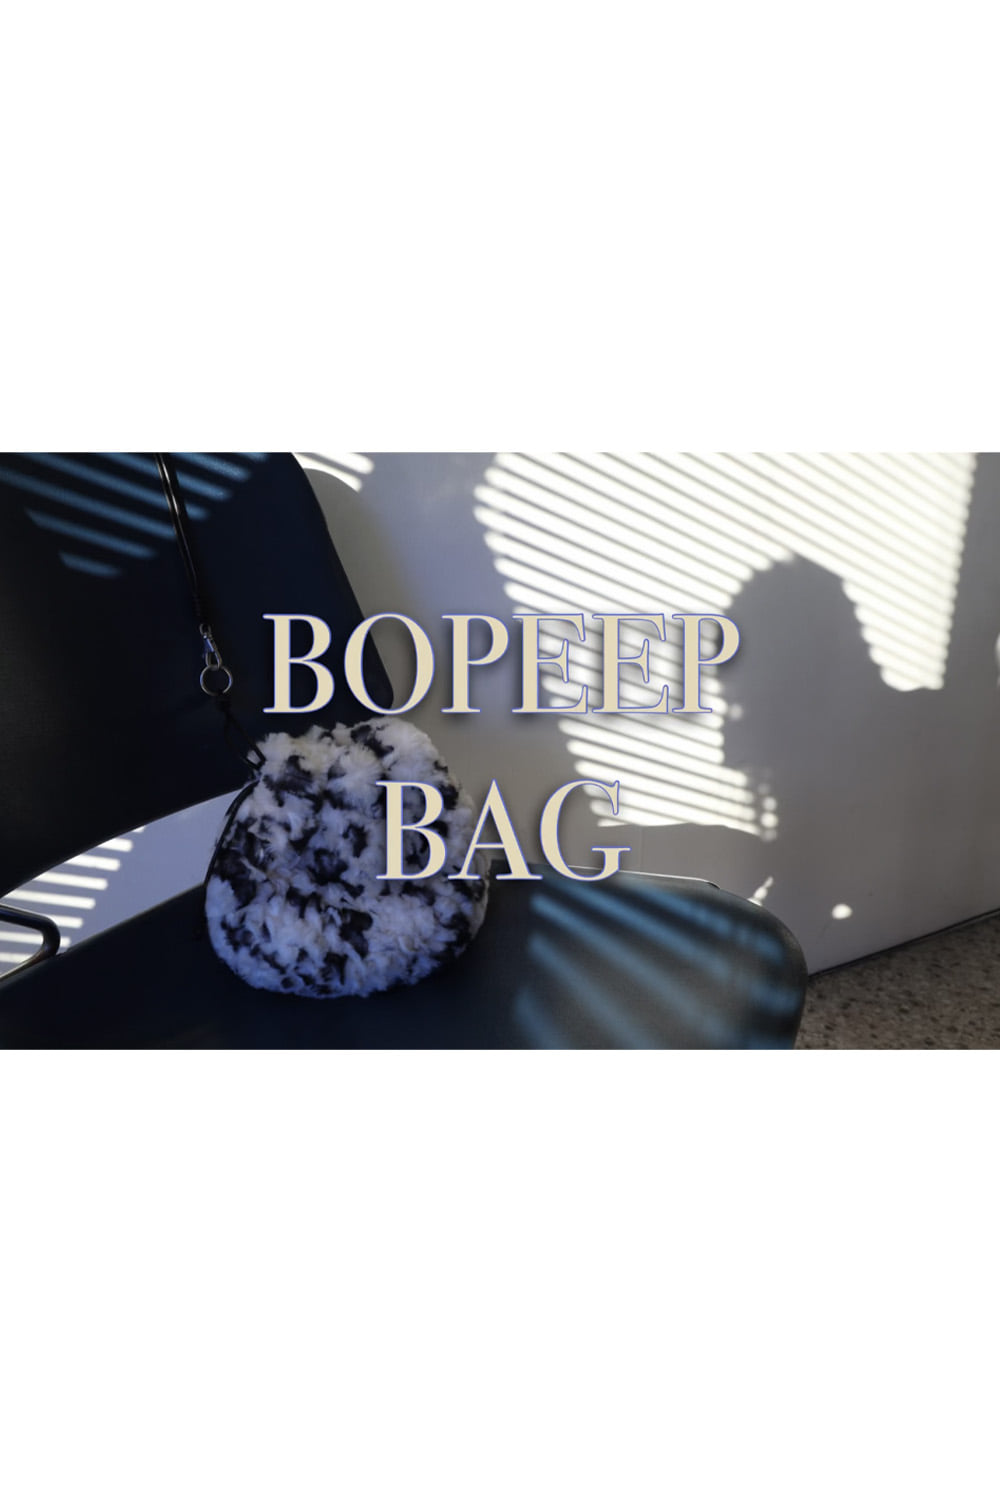 How to? Bopeep Bag